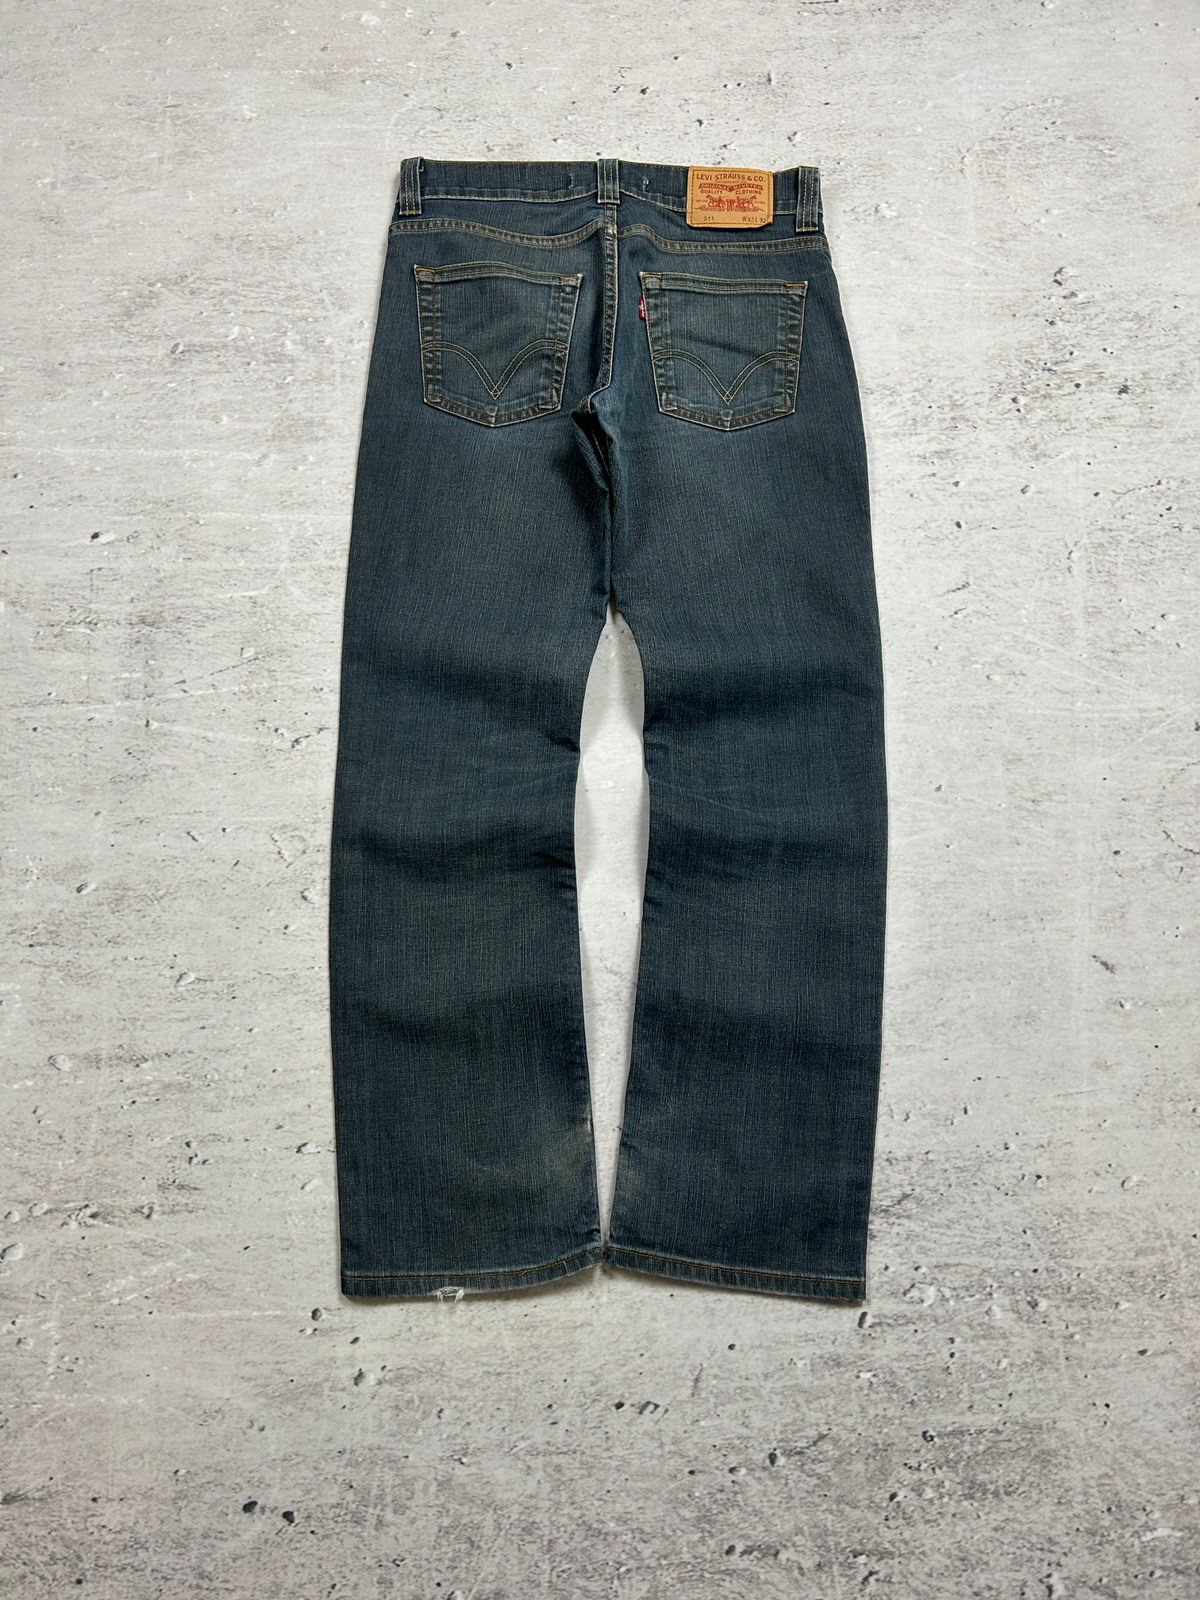 Pre-owned Levis X Levis Vintage Clothing Vintage Levis 511 Red Tab Distressed Denim Jeans 00s In Blue